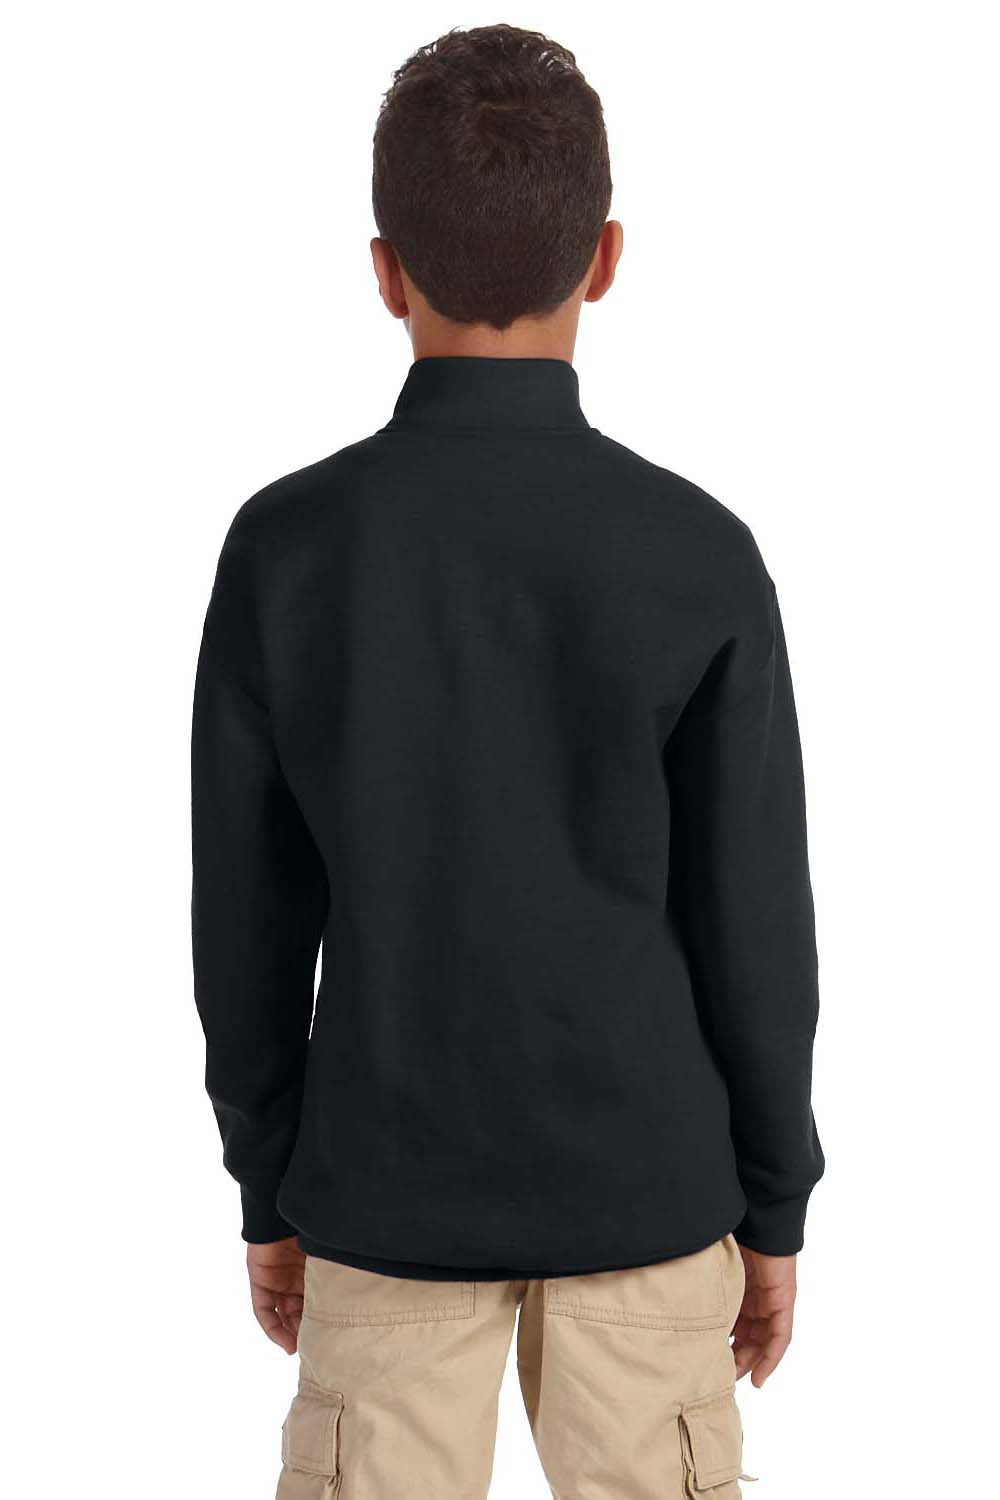 Jerzees 995Y Youth NuBlend Fleece 1/4 Zip Sweatshirt Black Back